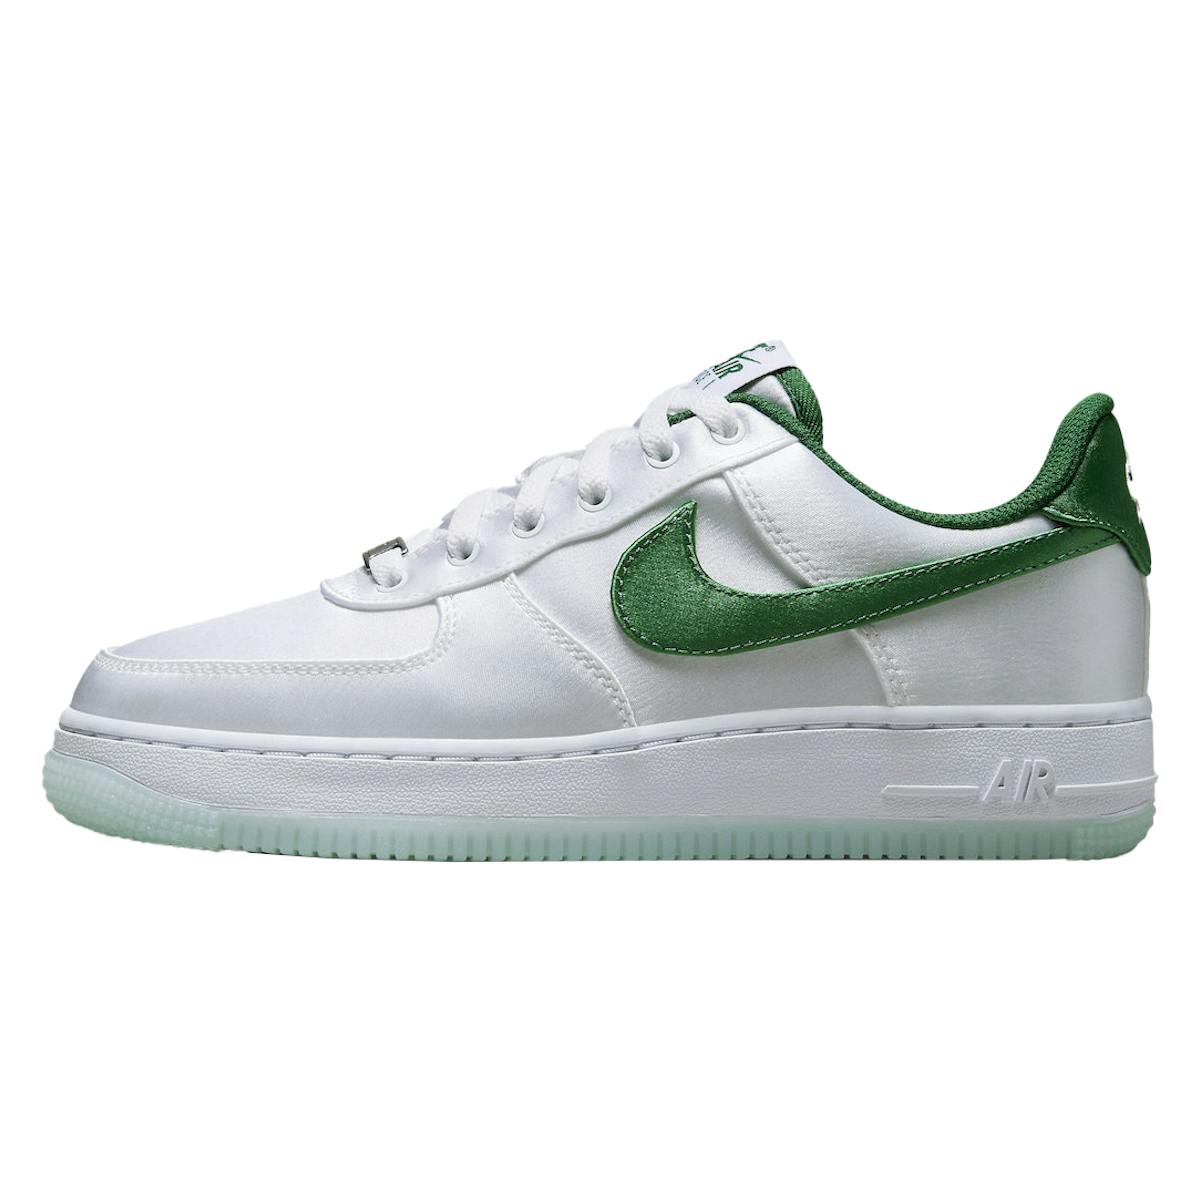 Nike Air Force 1 Low "Satin Sport Green"